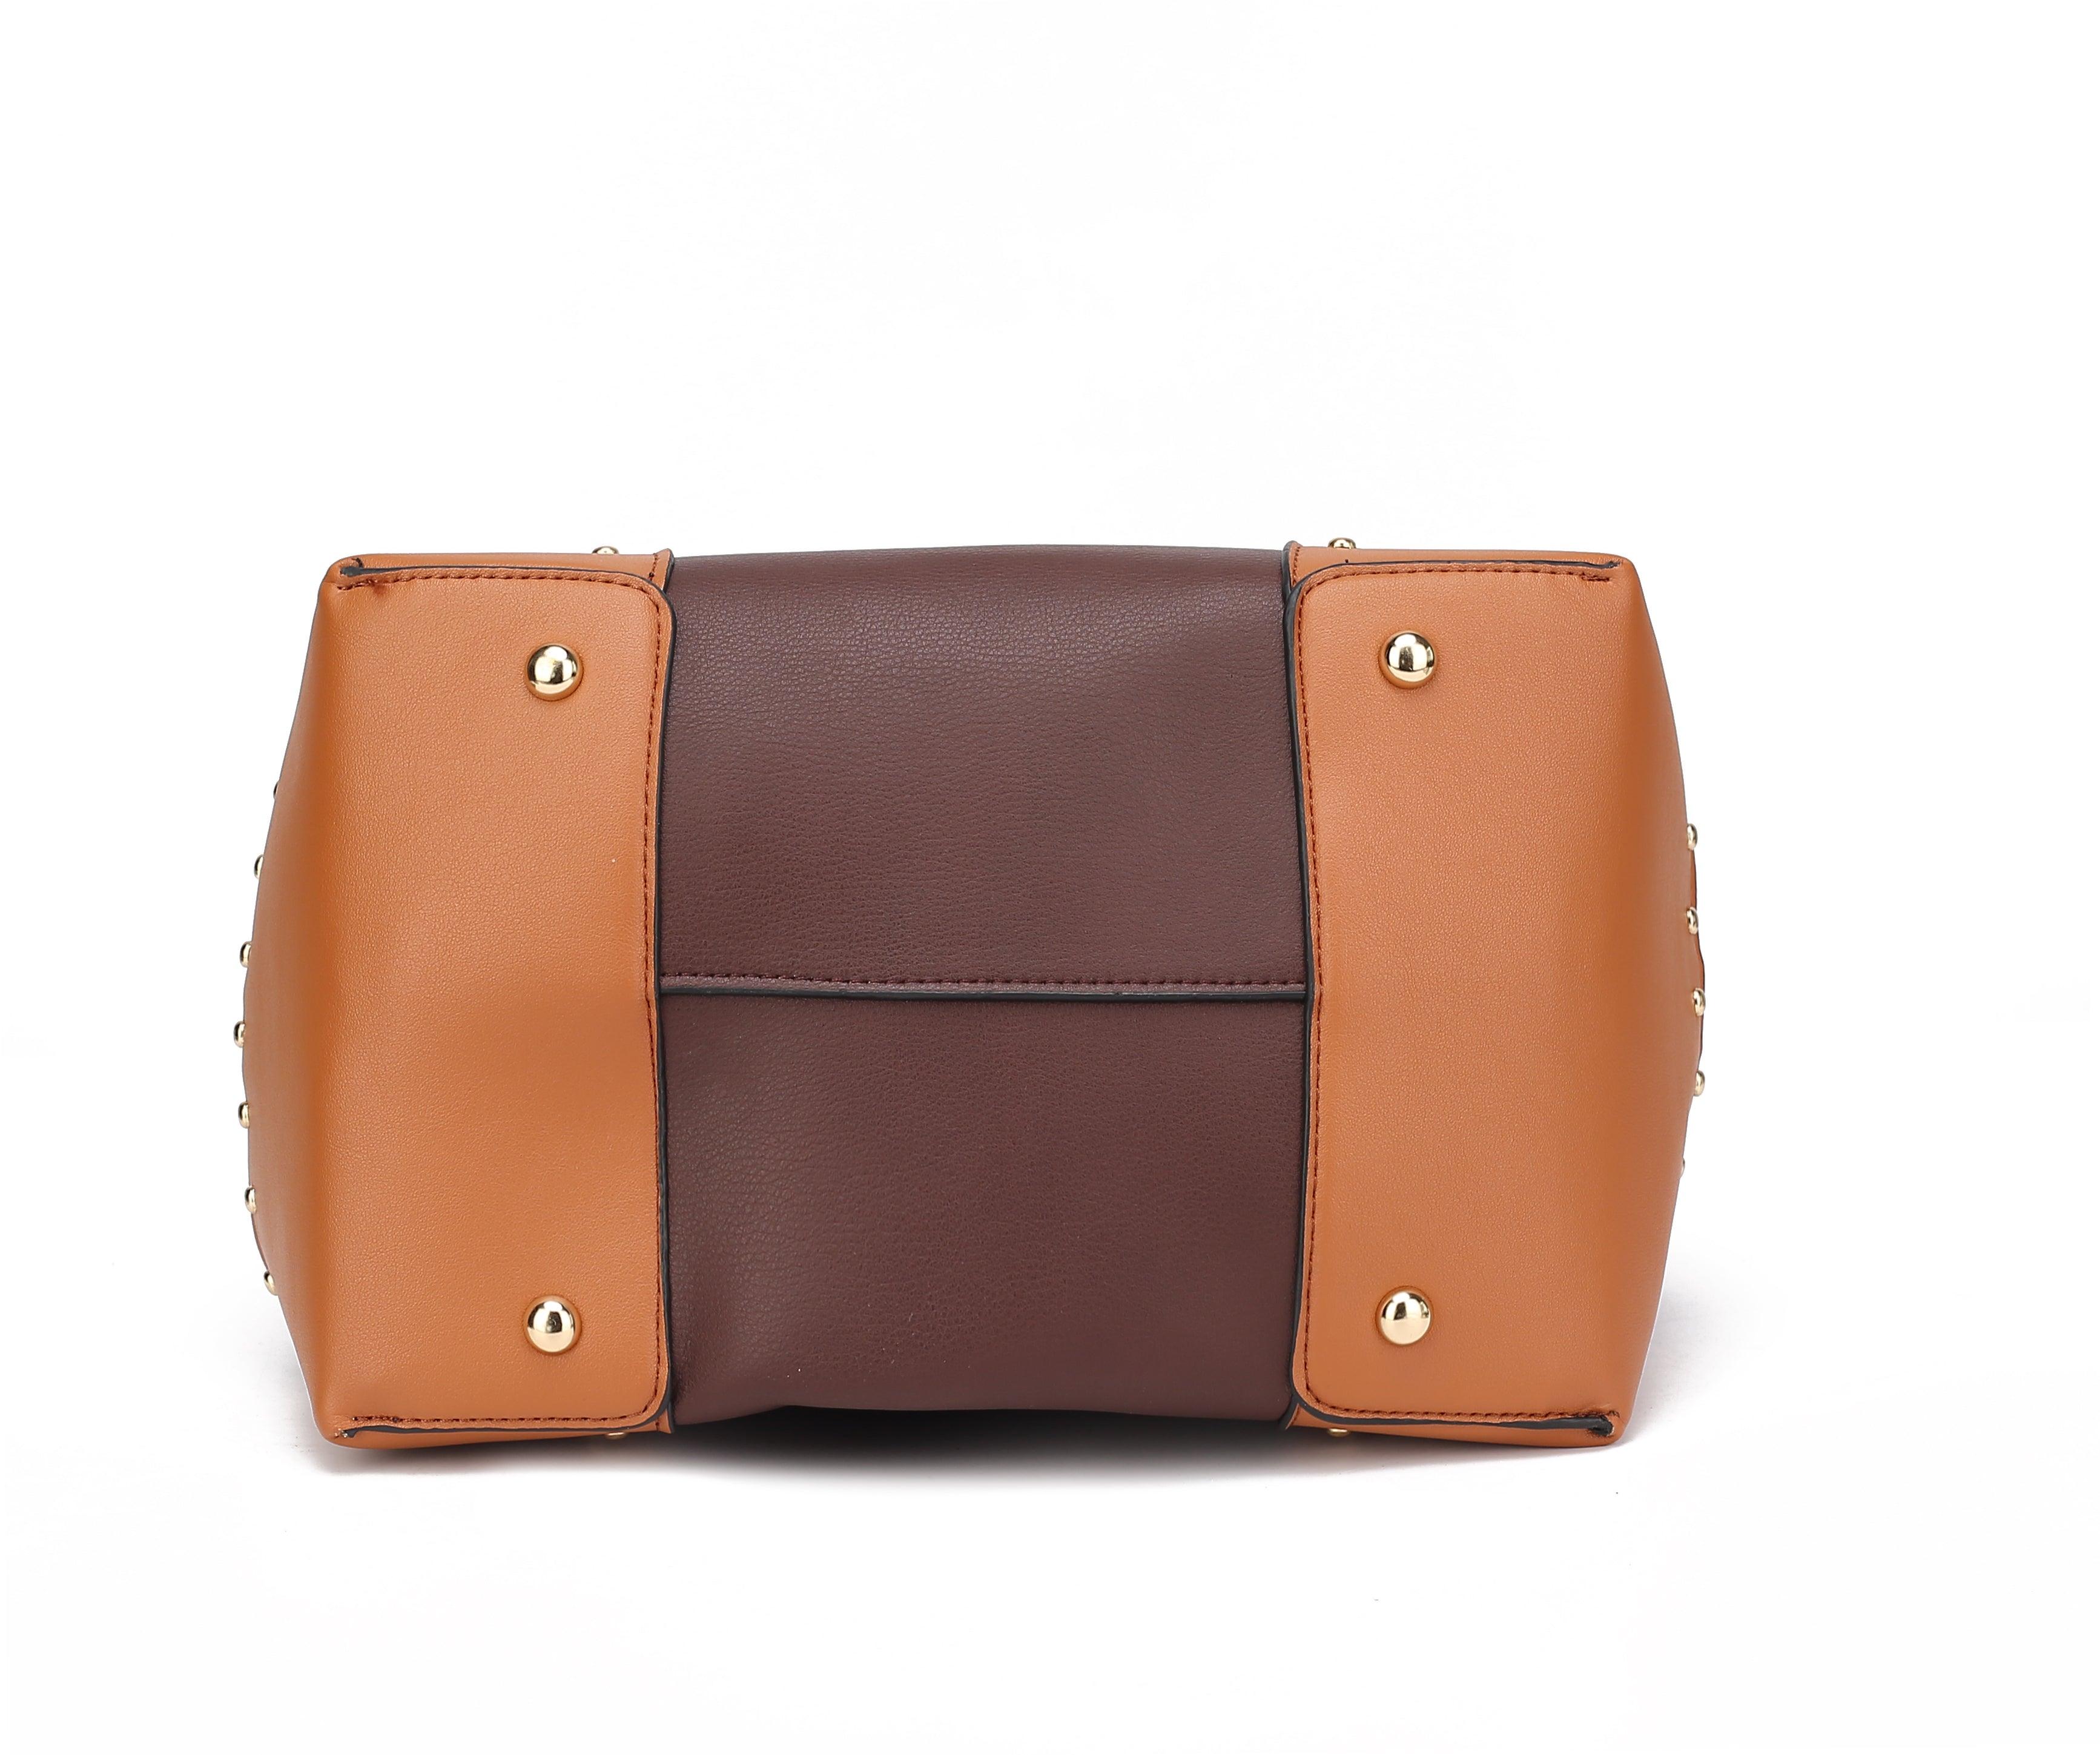 Wallets, Handbags & Accessories Candice Color Block Bucket Bag With Matching Wallet